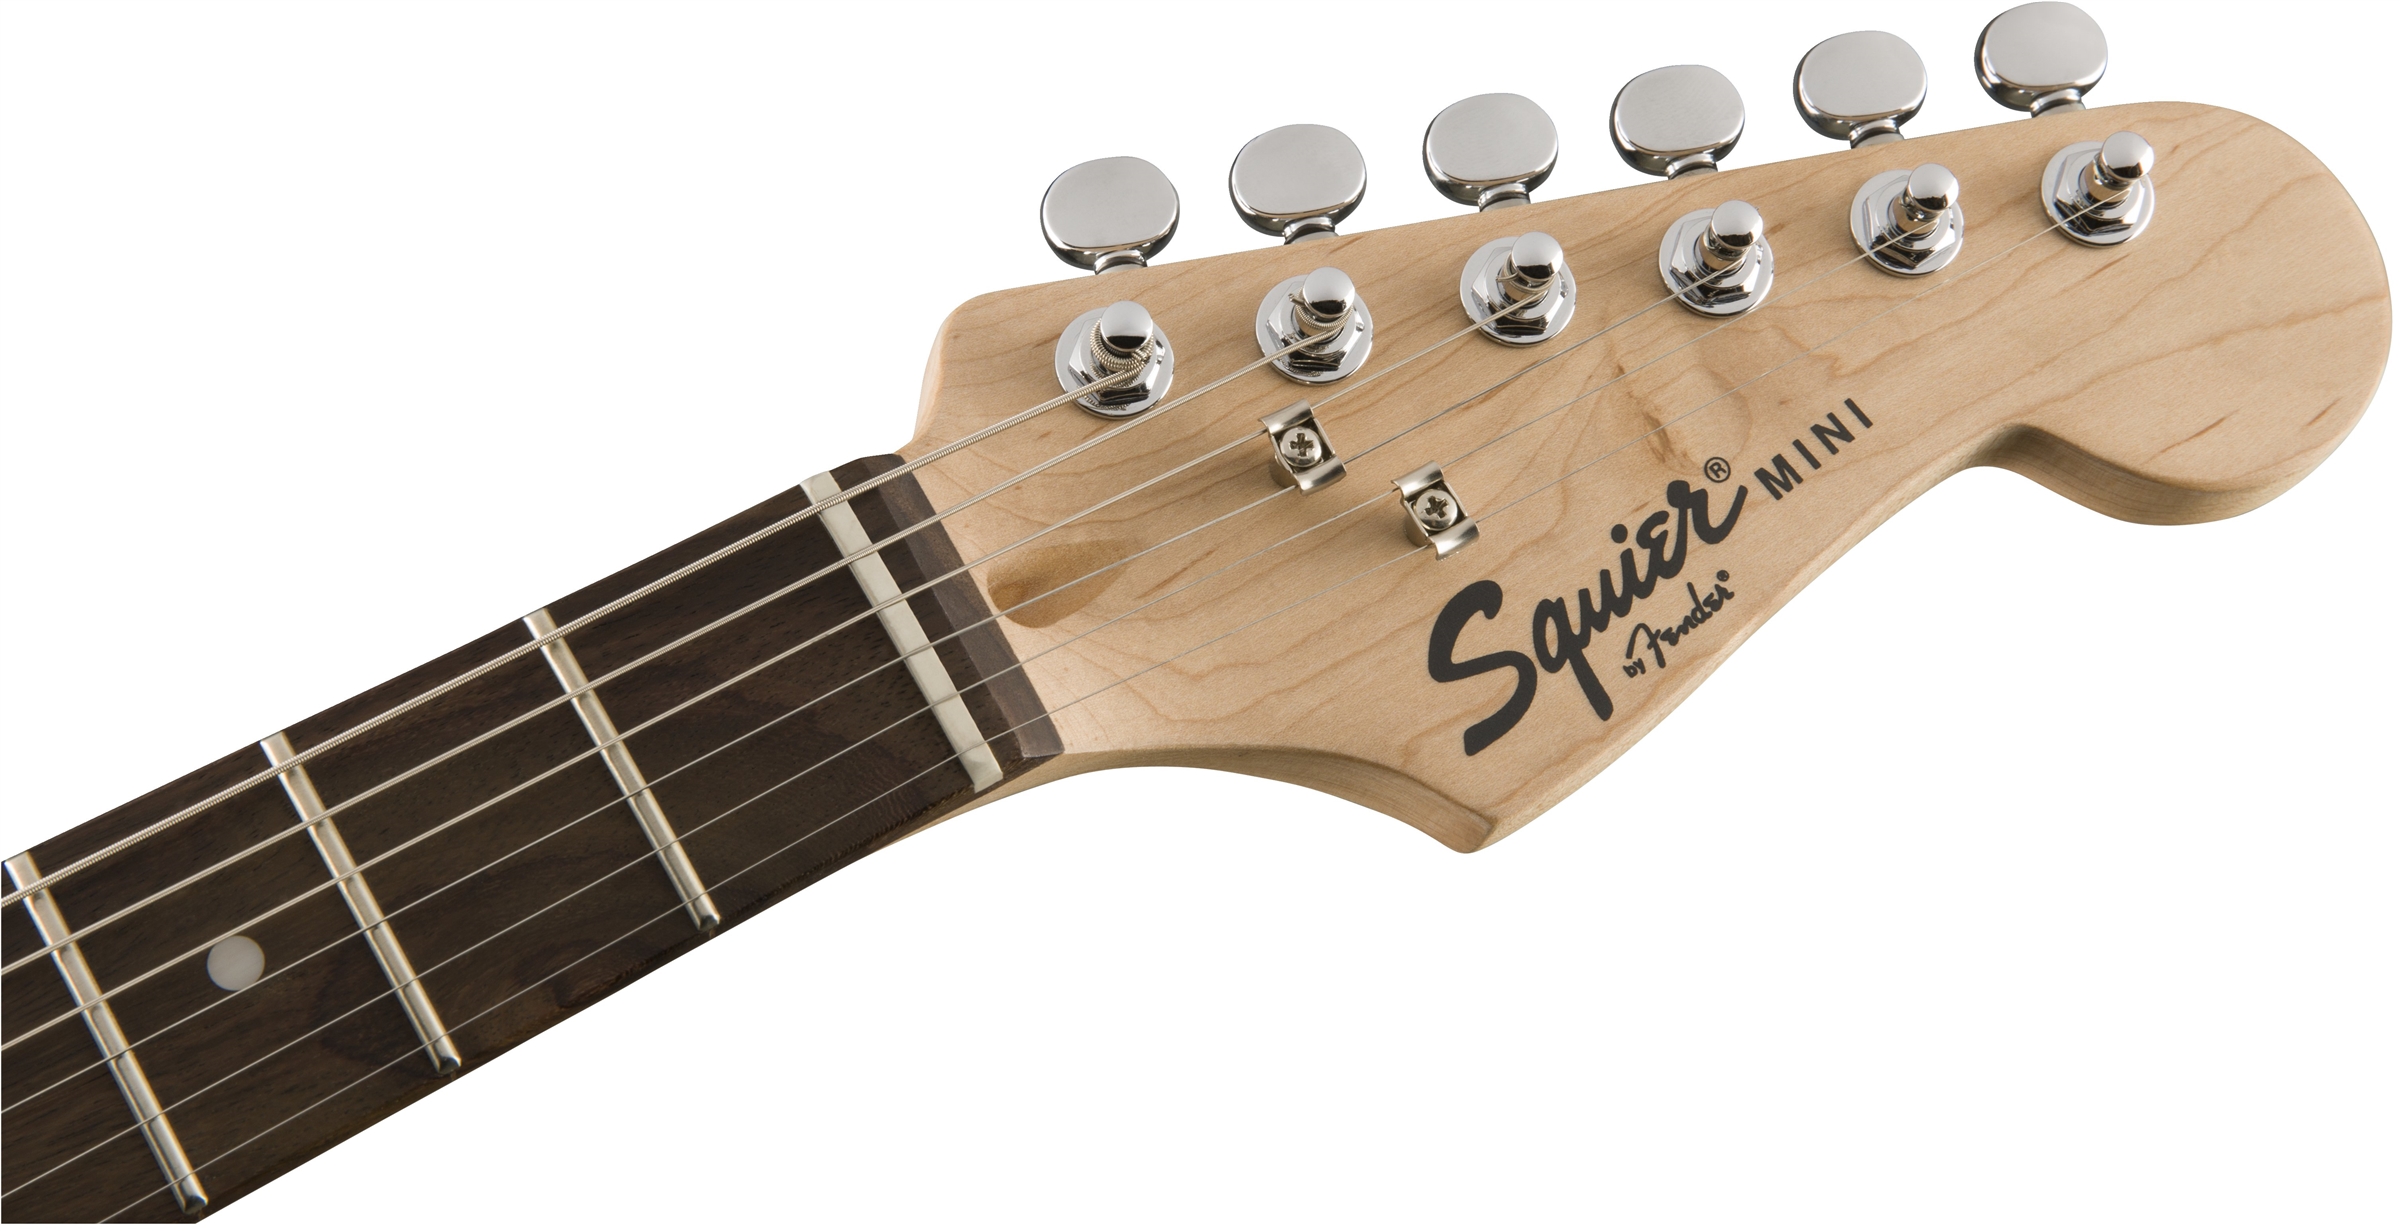 Squier Strat Mini V2 Sss Ht Rw - Black - Electric guitar for kids - Variation 2